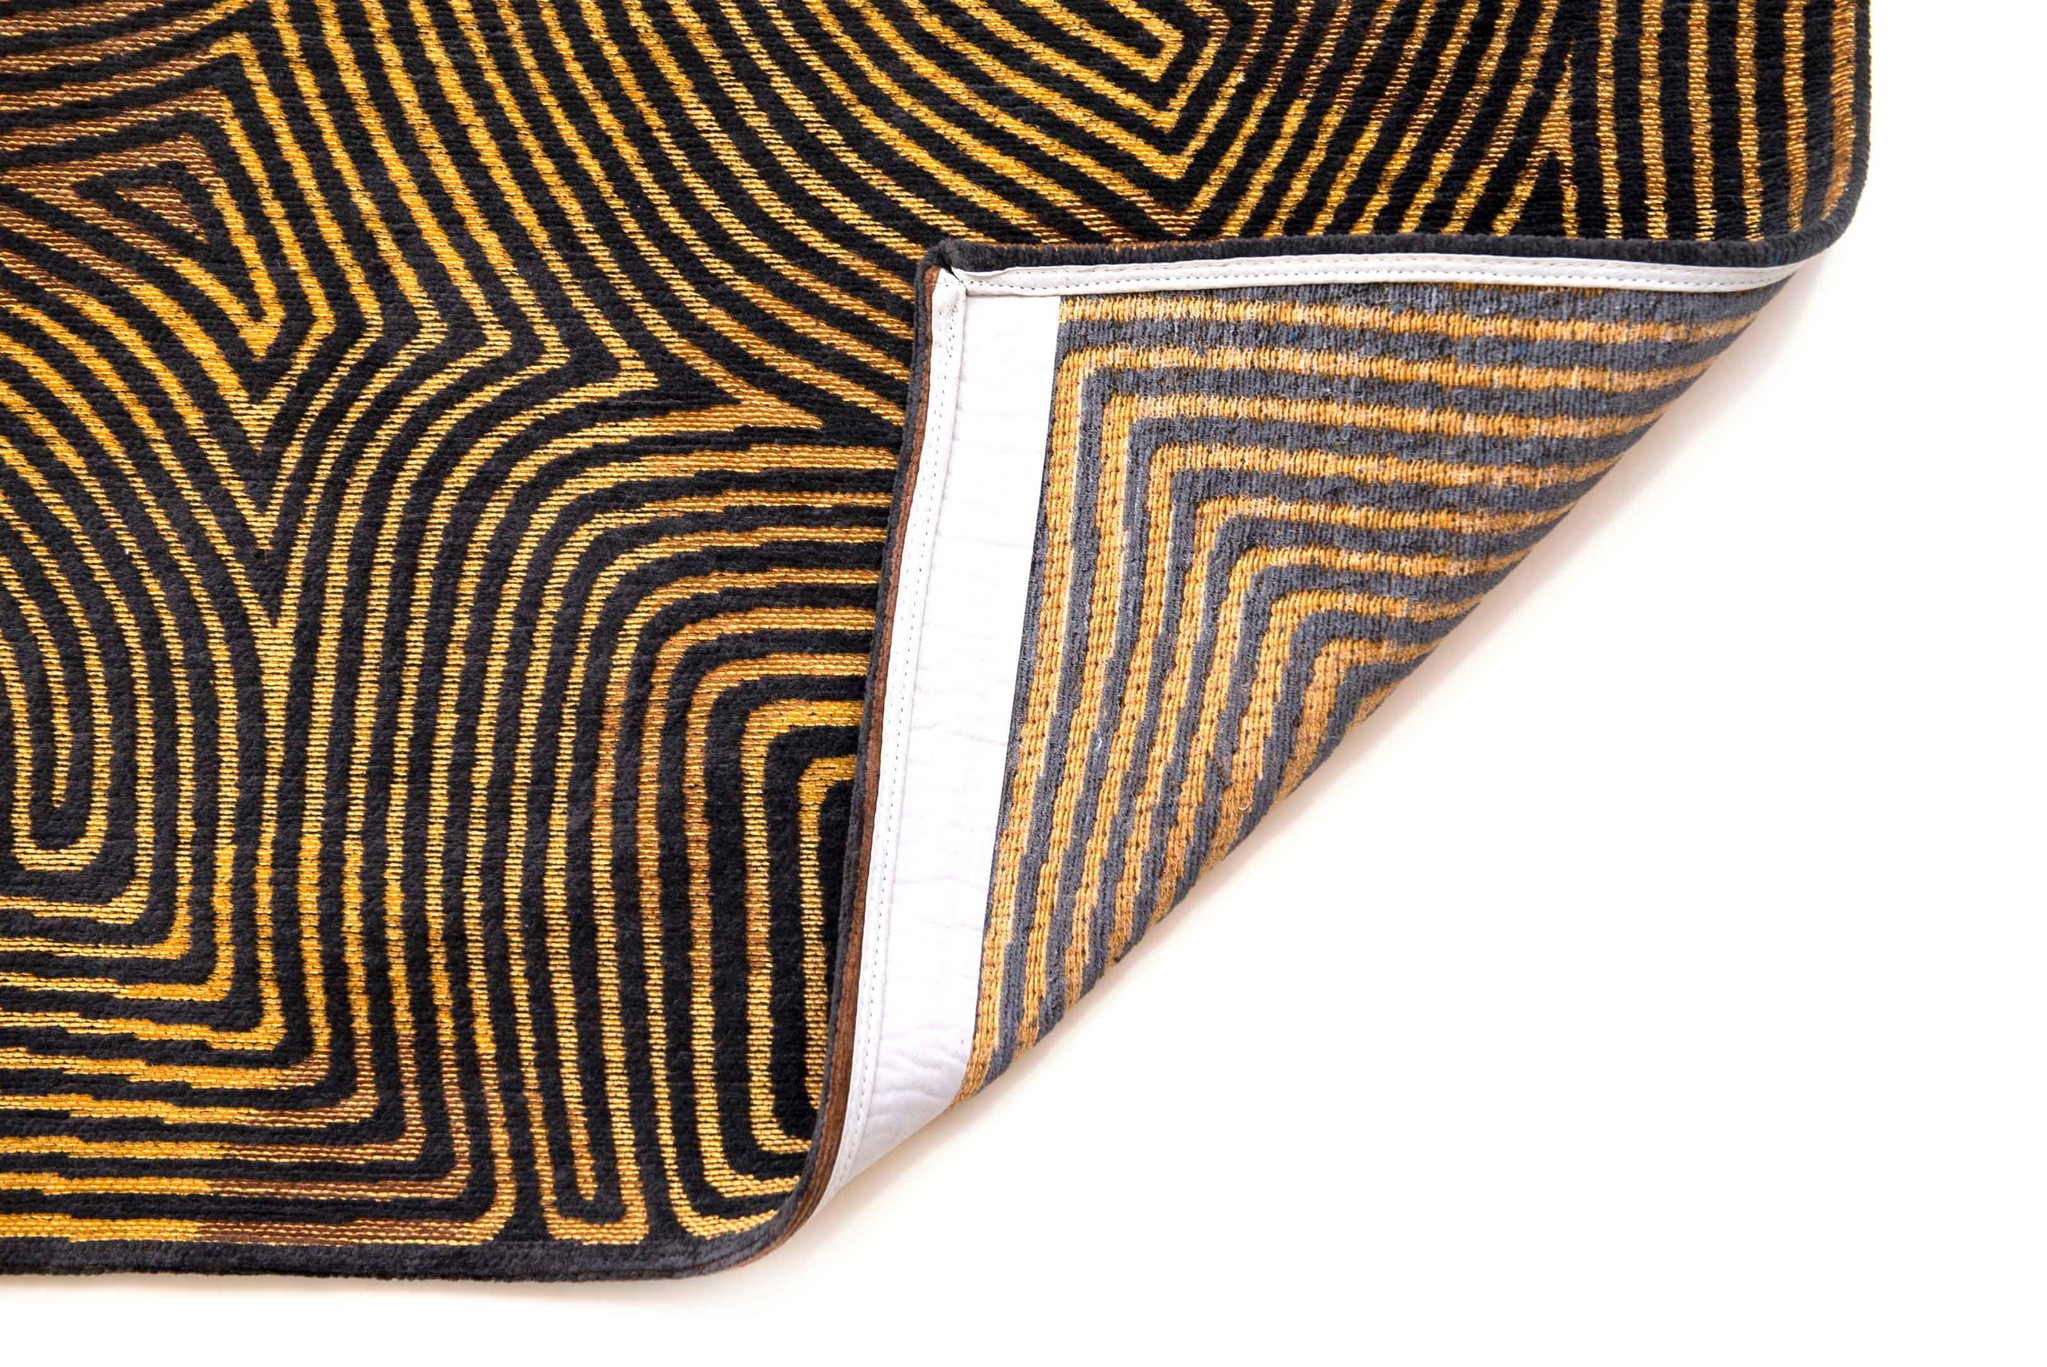 Black Gold Flatwoven Rug ☞ Size: 5' 7" x 8' (170 x 240 cm)